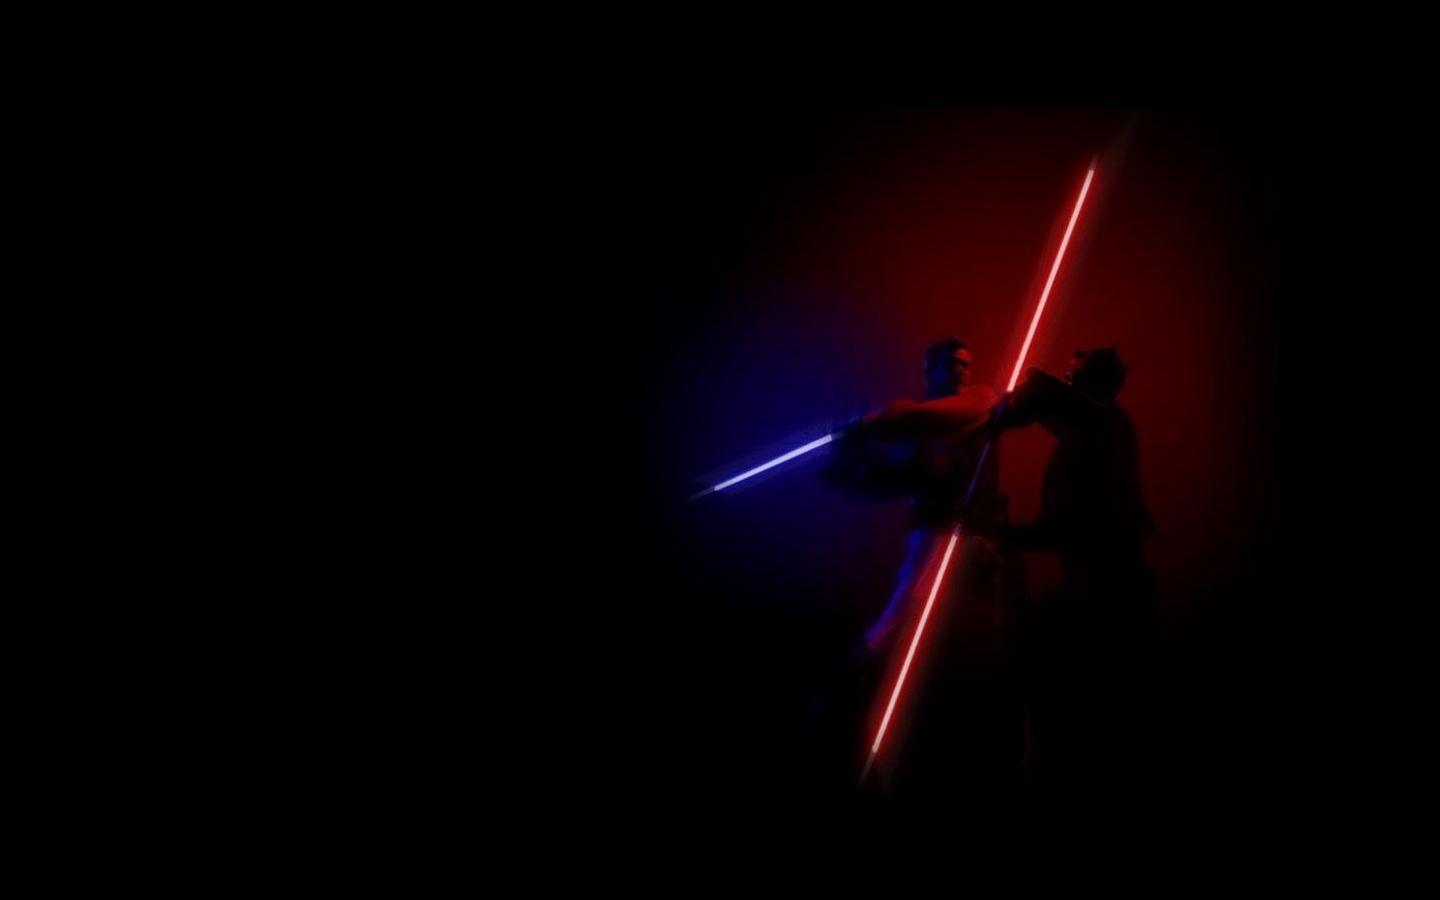 Star Wars Lightsaber Wallpaper Widescreen Full HD Pics For iPhone